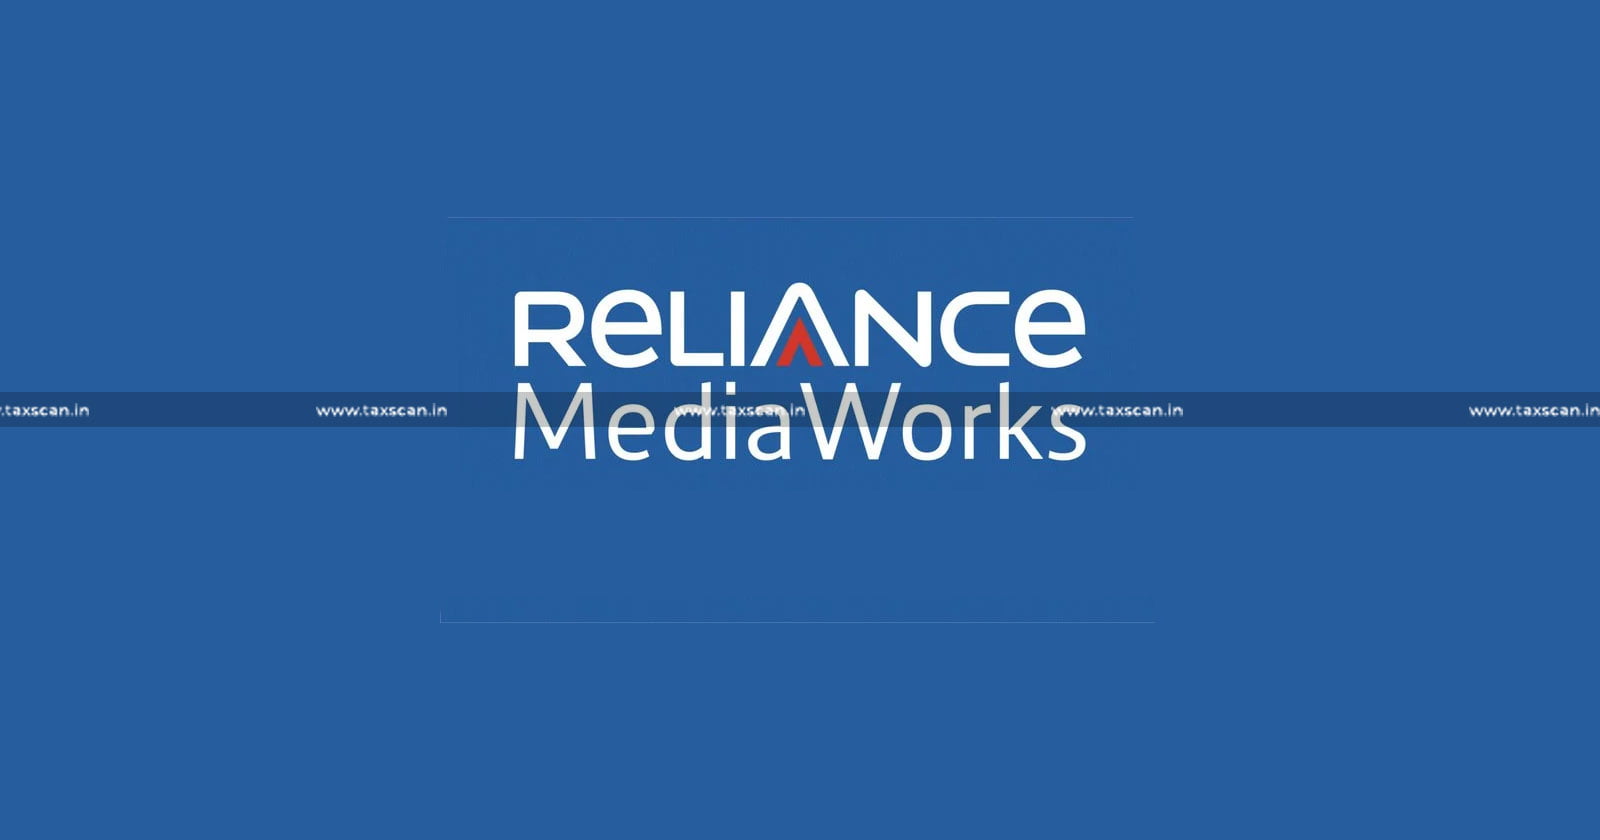 Reliance Media Work - Service Tax - Tax - BSS - Business Support Service - CESTAT - Taxscan